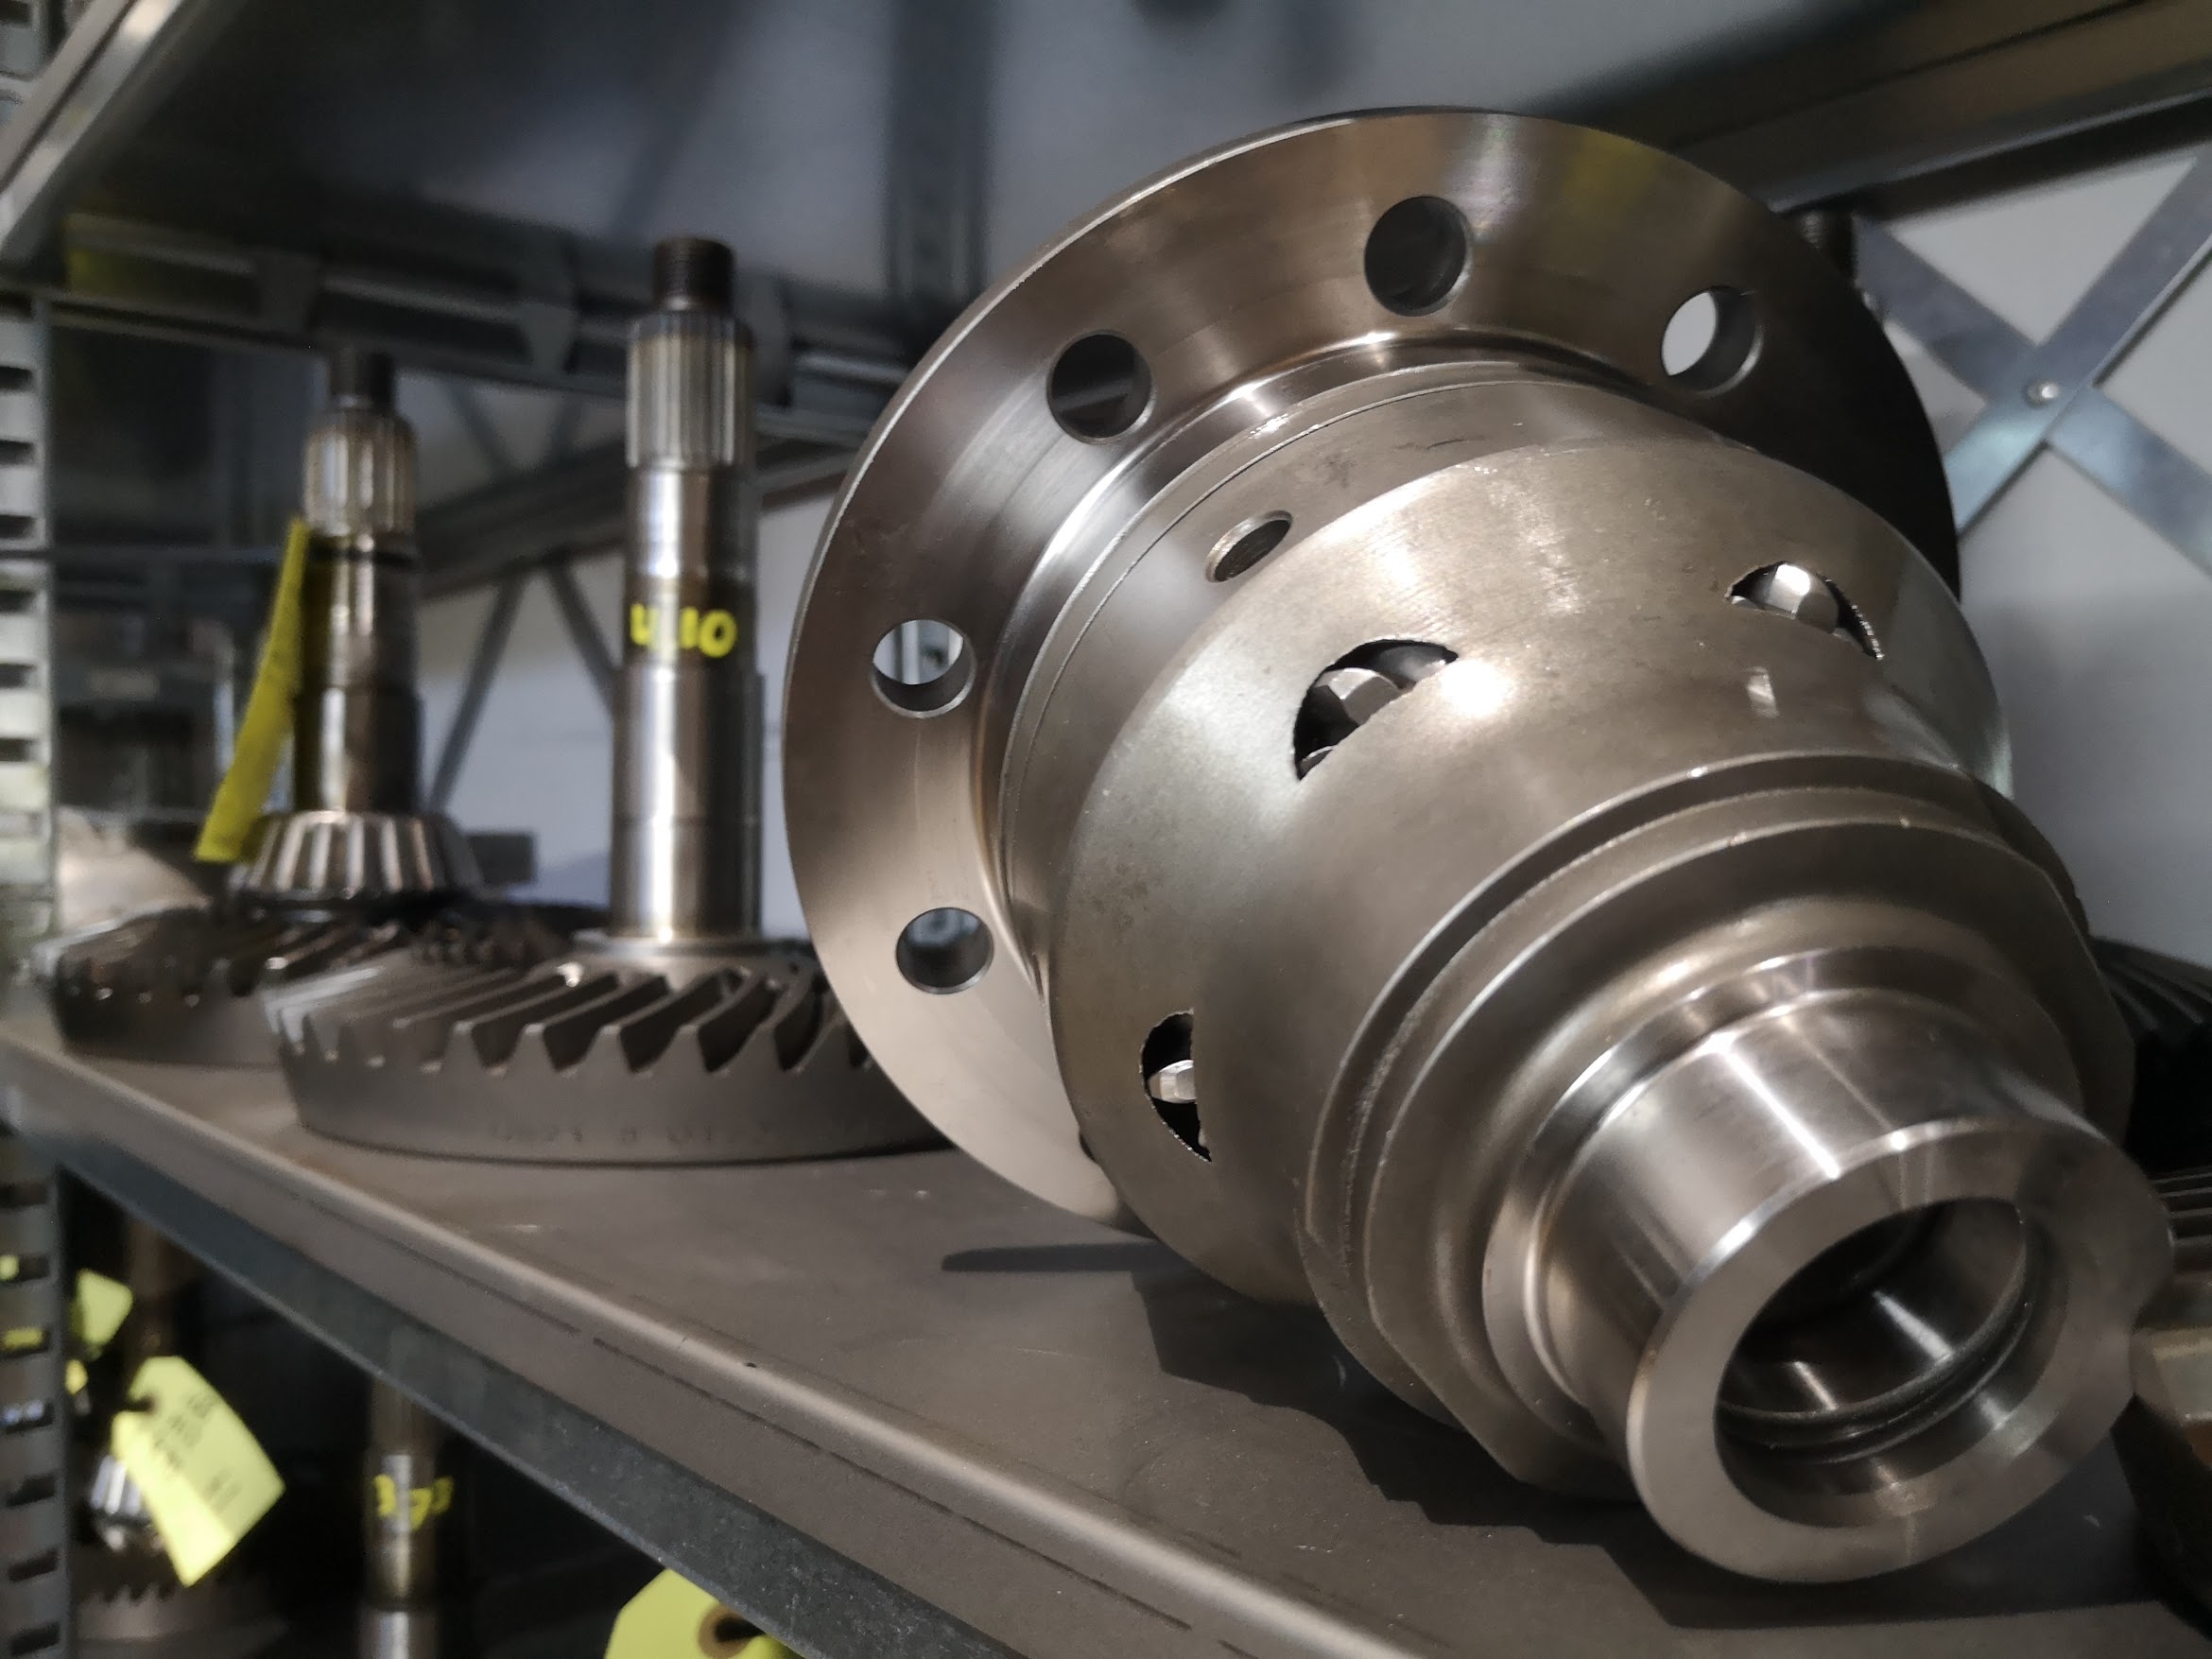 Precision gearing VW 020 Transmission with 109mm Crownwheel torsen sper